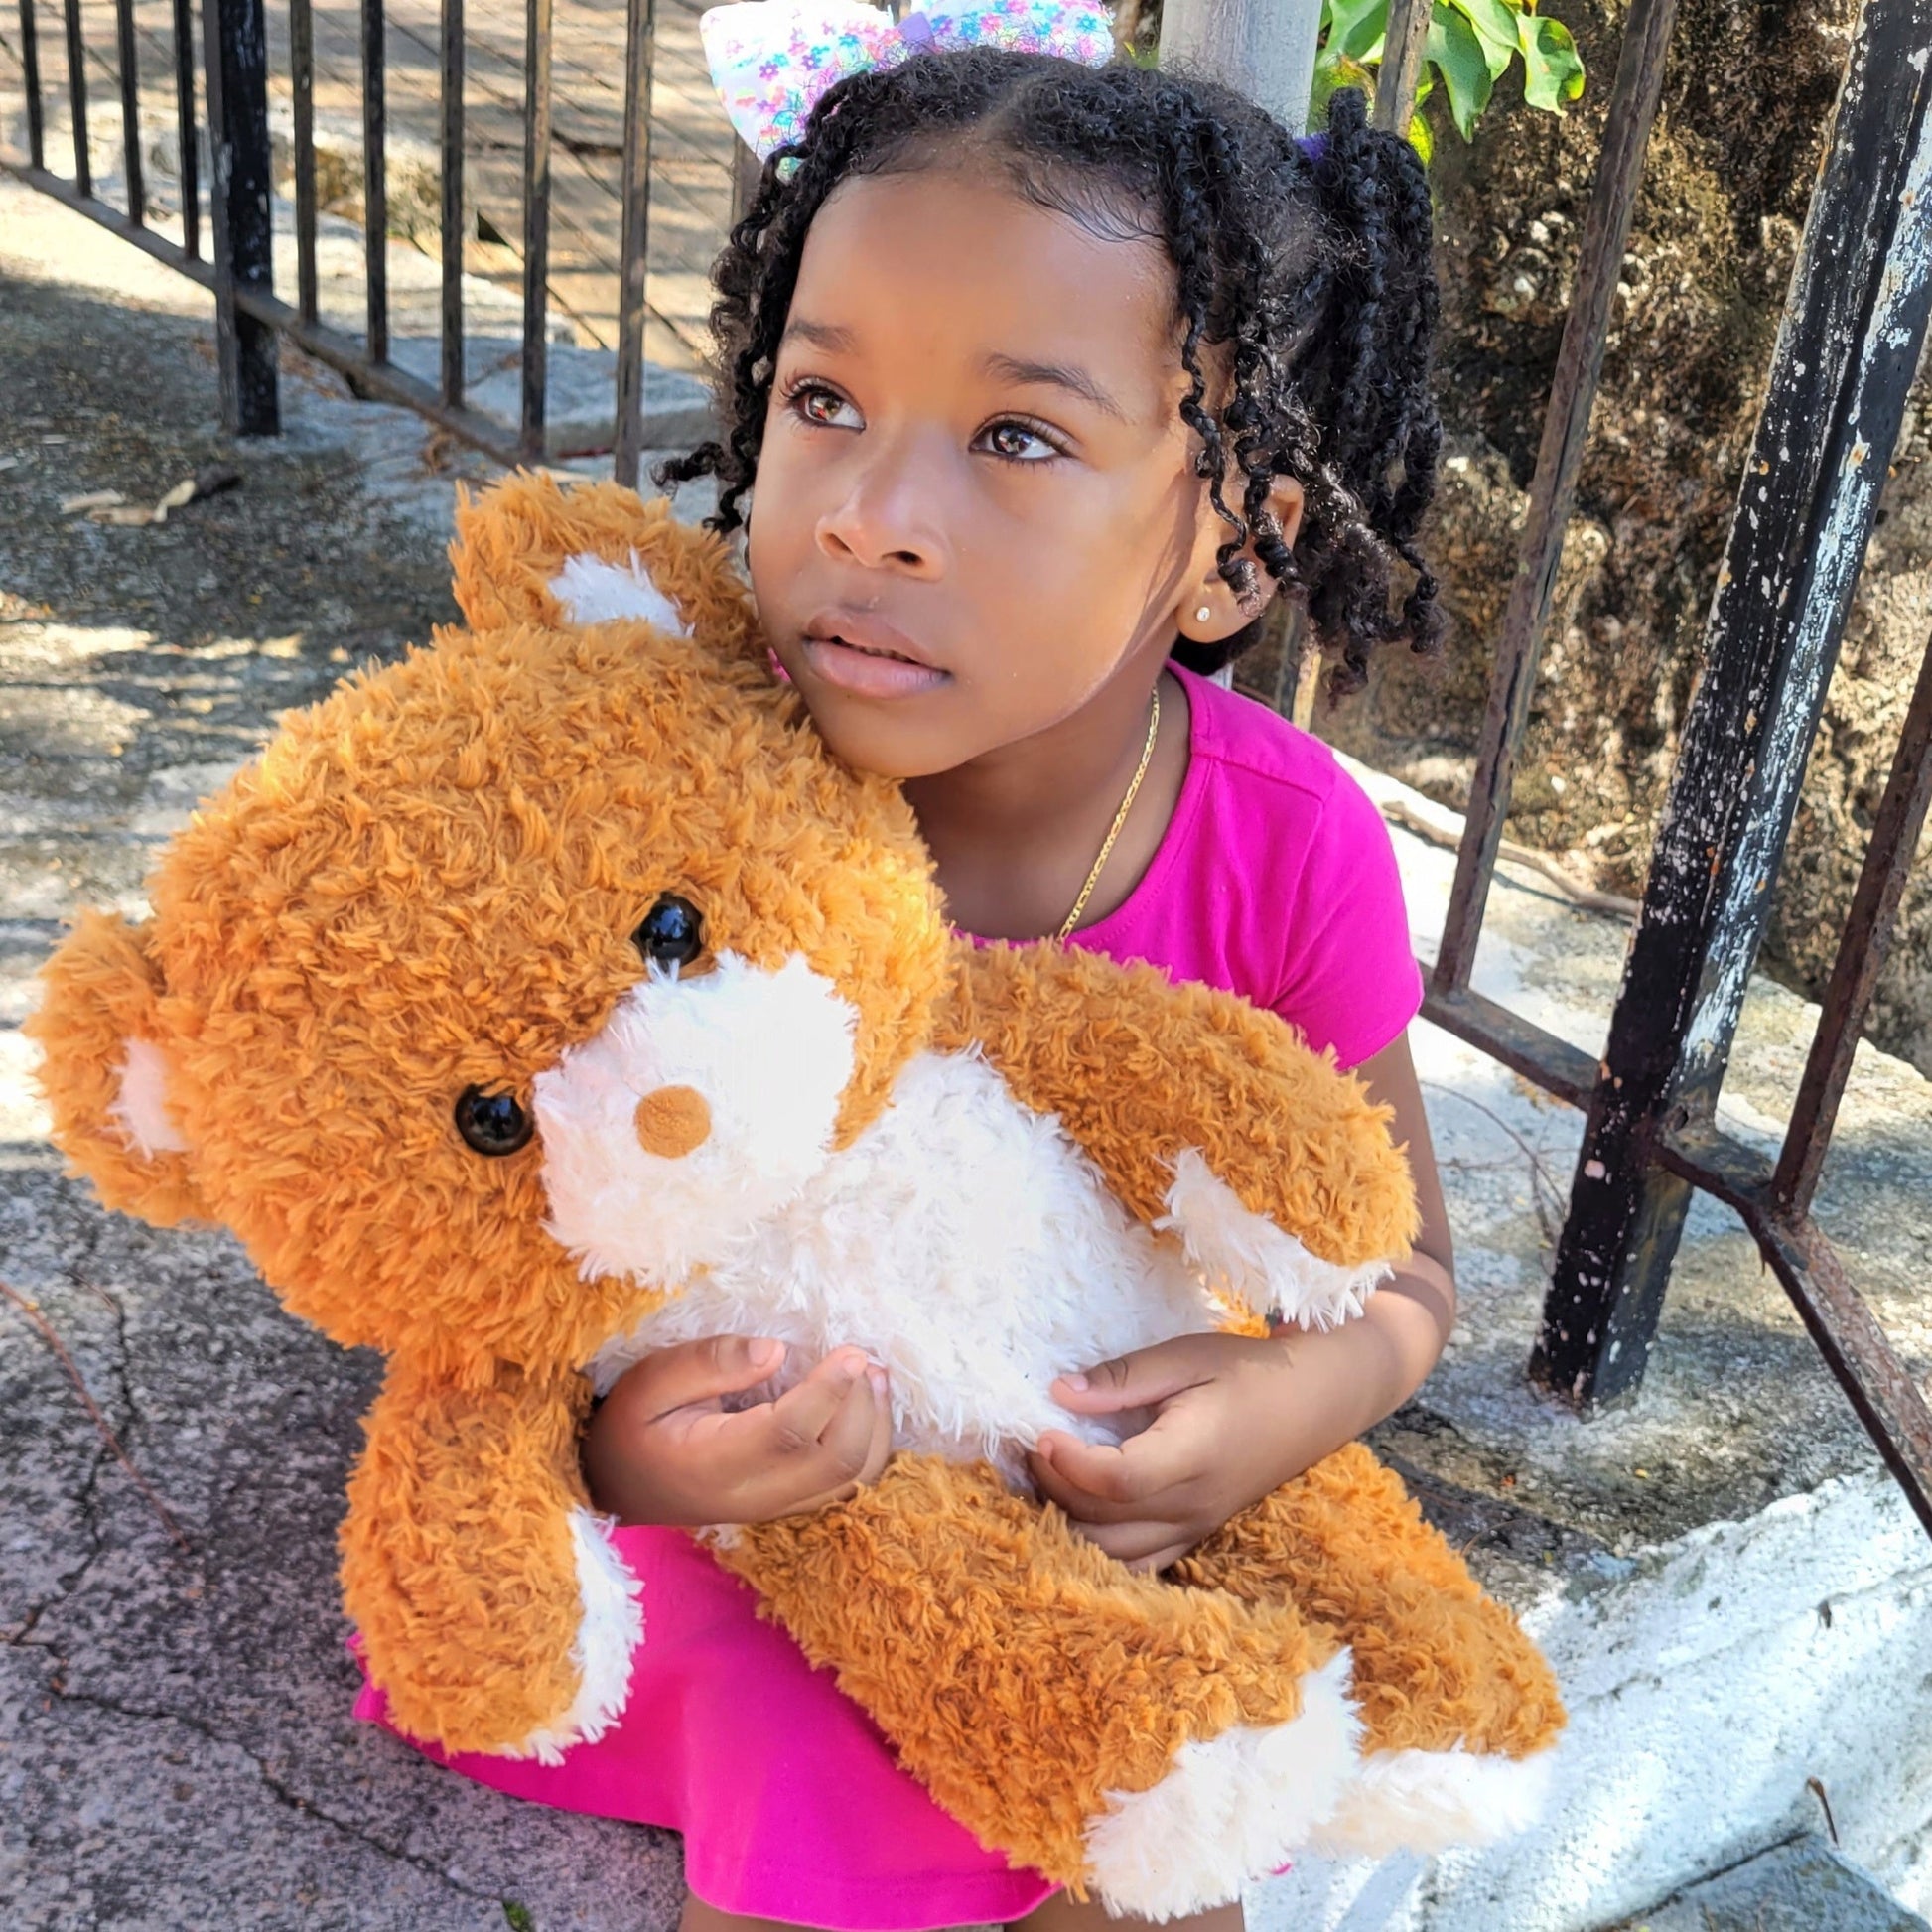 Teddy Bear Stuffed Animal Toy, 20.5 Inches, Brown